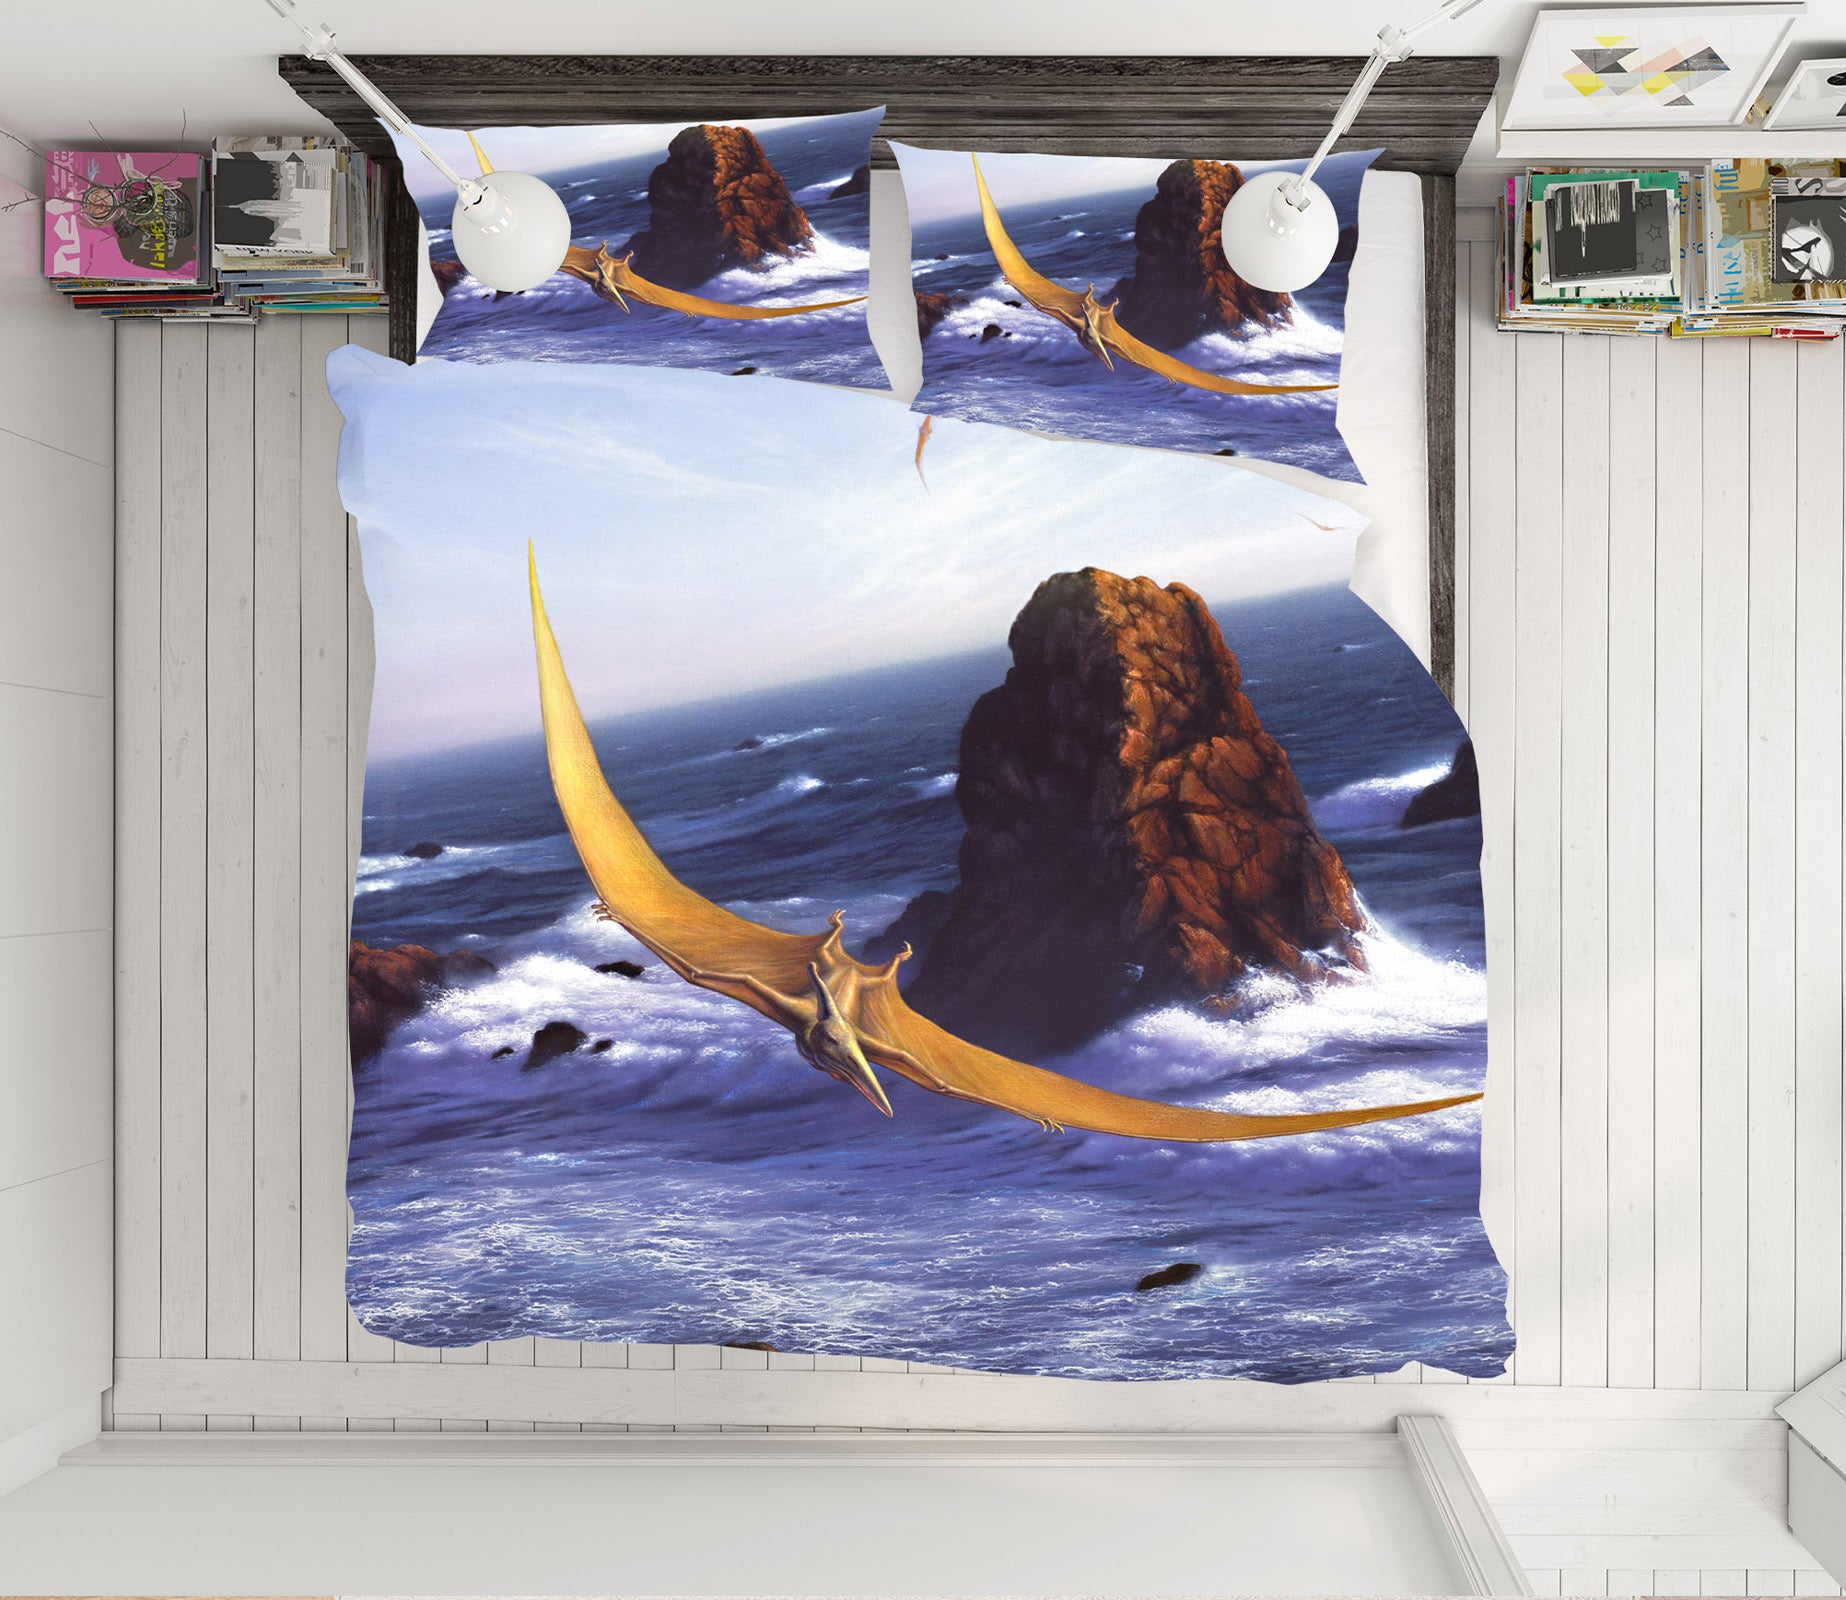 3D Pteranadon 86039 Jerry LoFaro bedding Bed Pillowcases Quilt